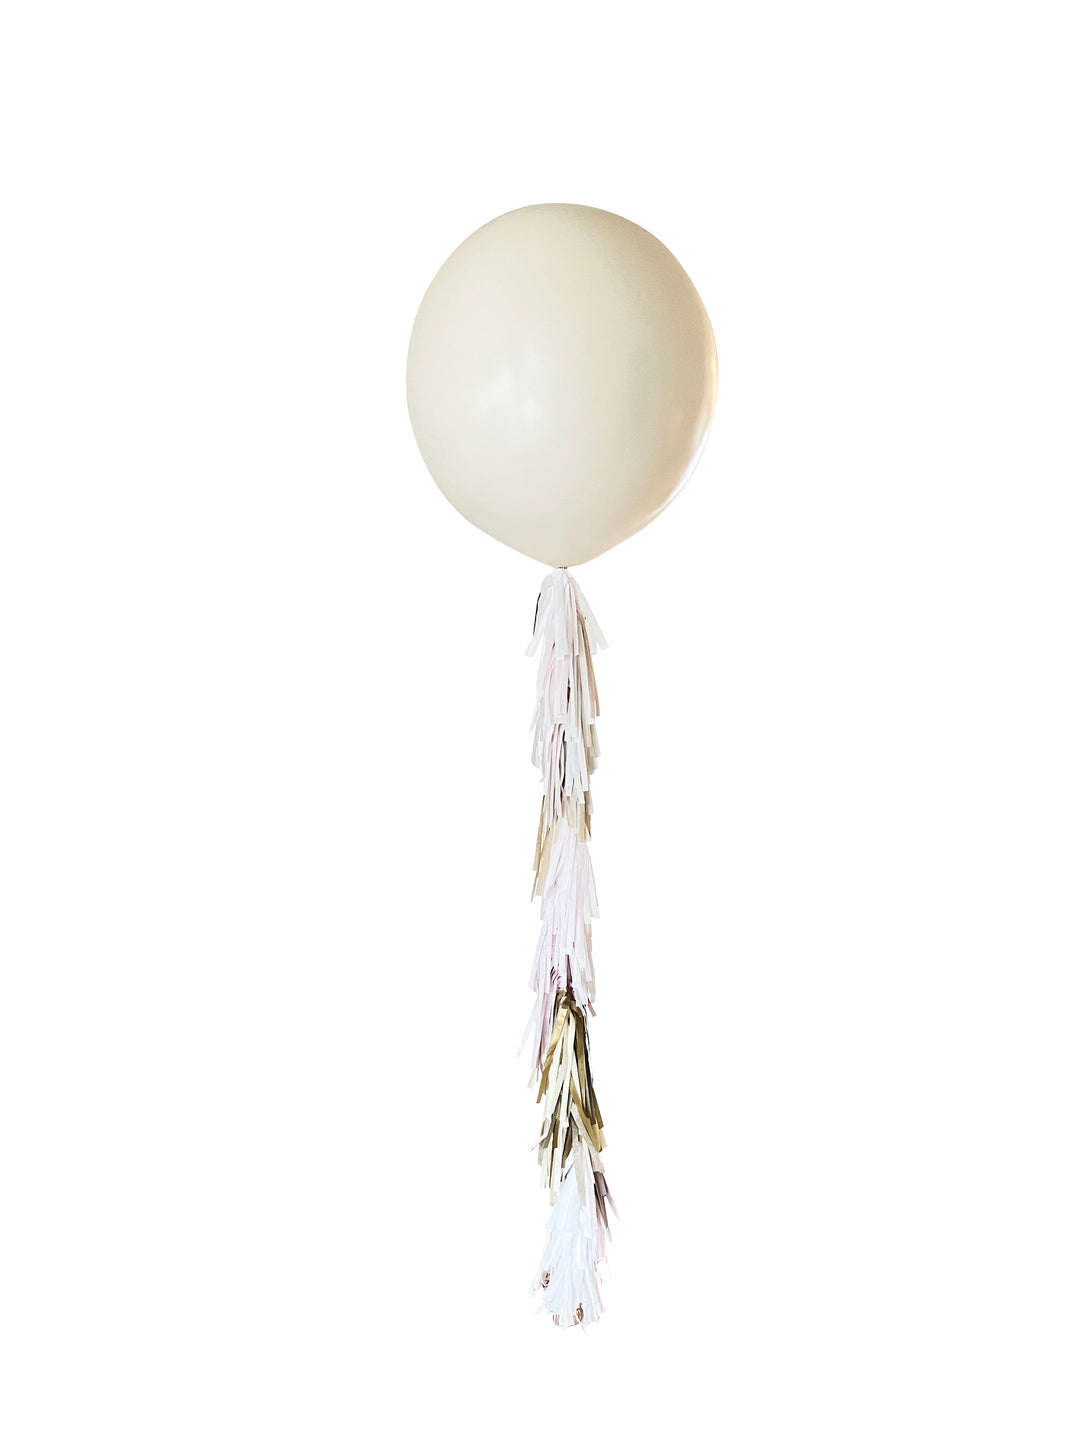 24" balloon with custom tassle tail